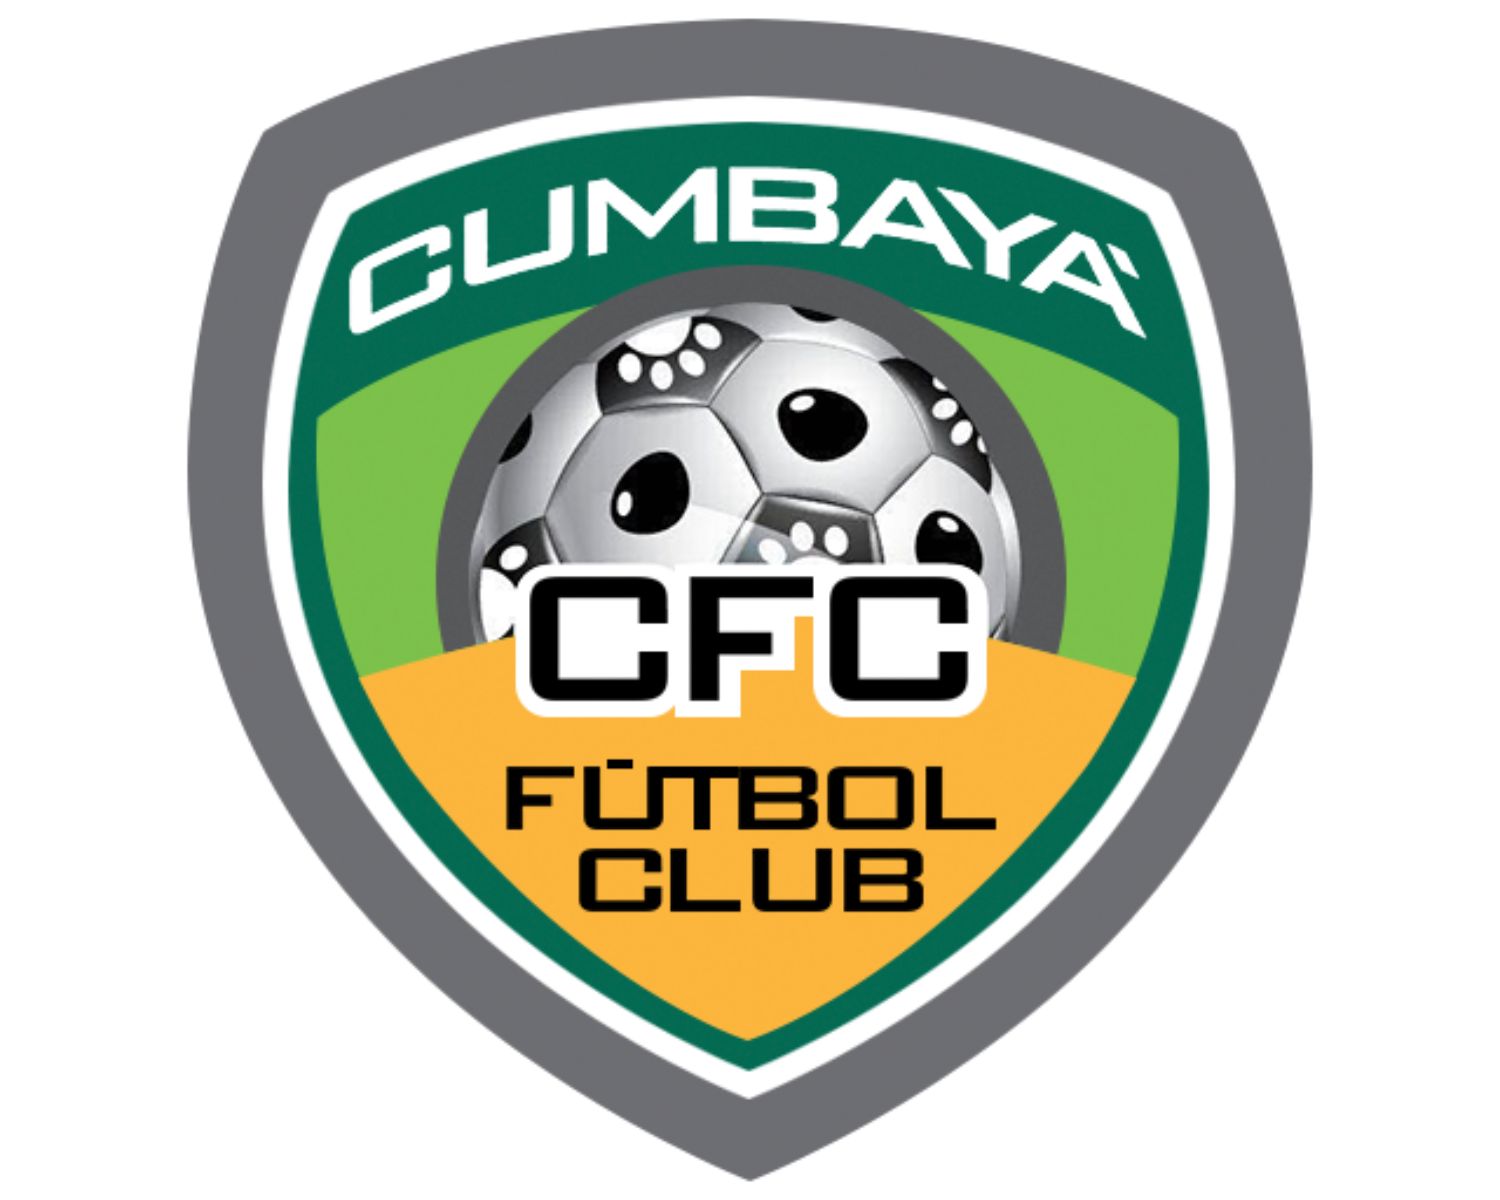 cumbaya-fc-10-football-club-facts